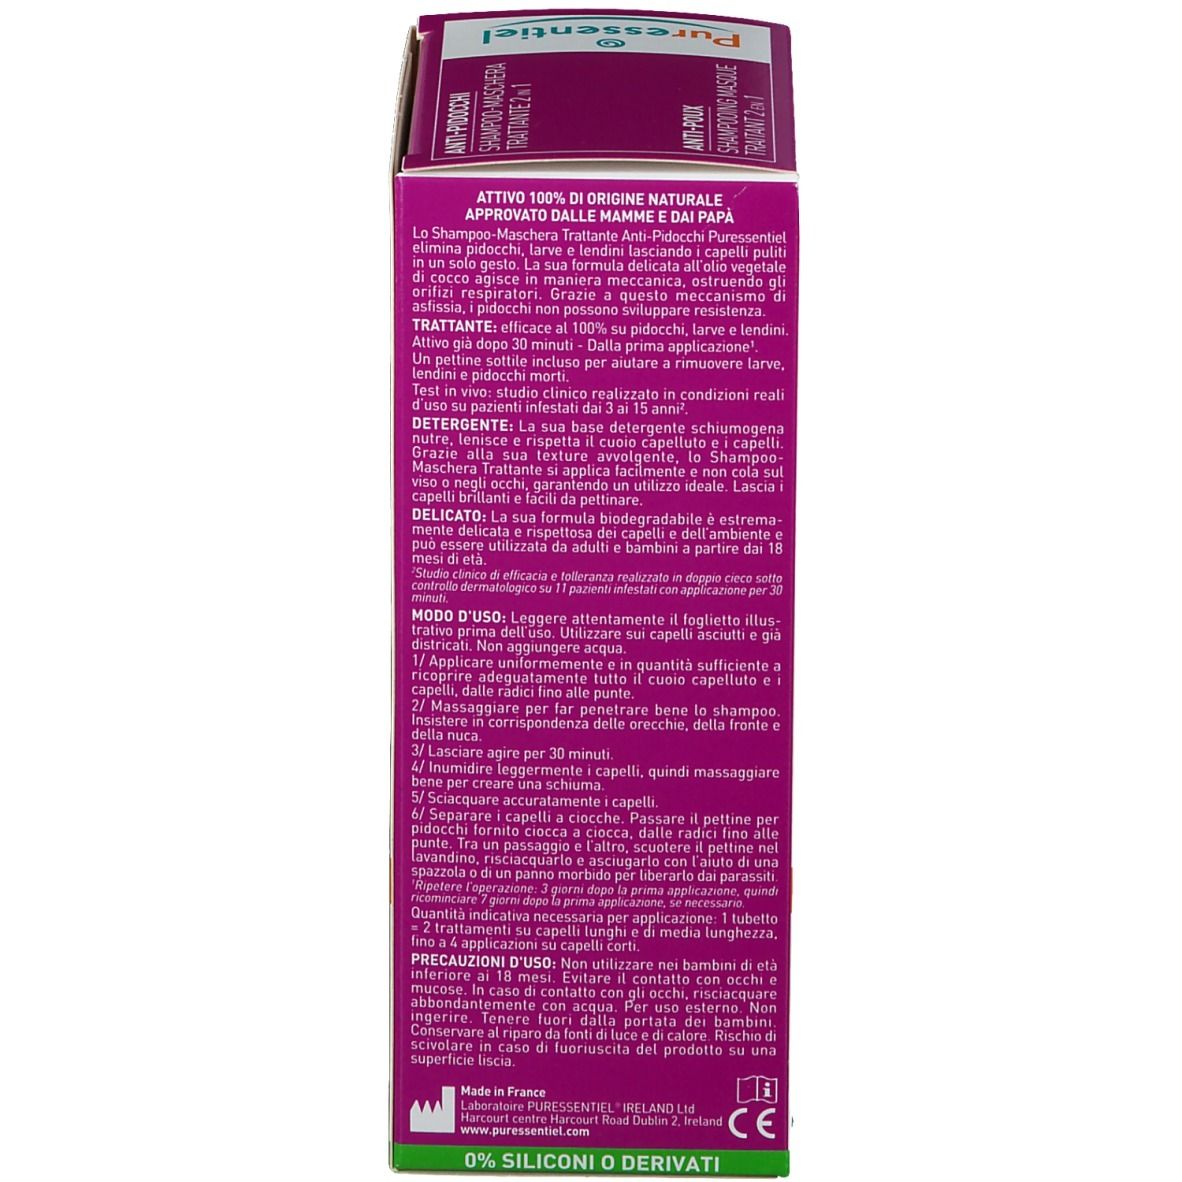 Puressentiel Anti-Pidocchi Shampoo Trattante 2 in 1